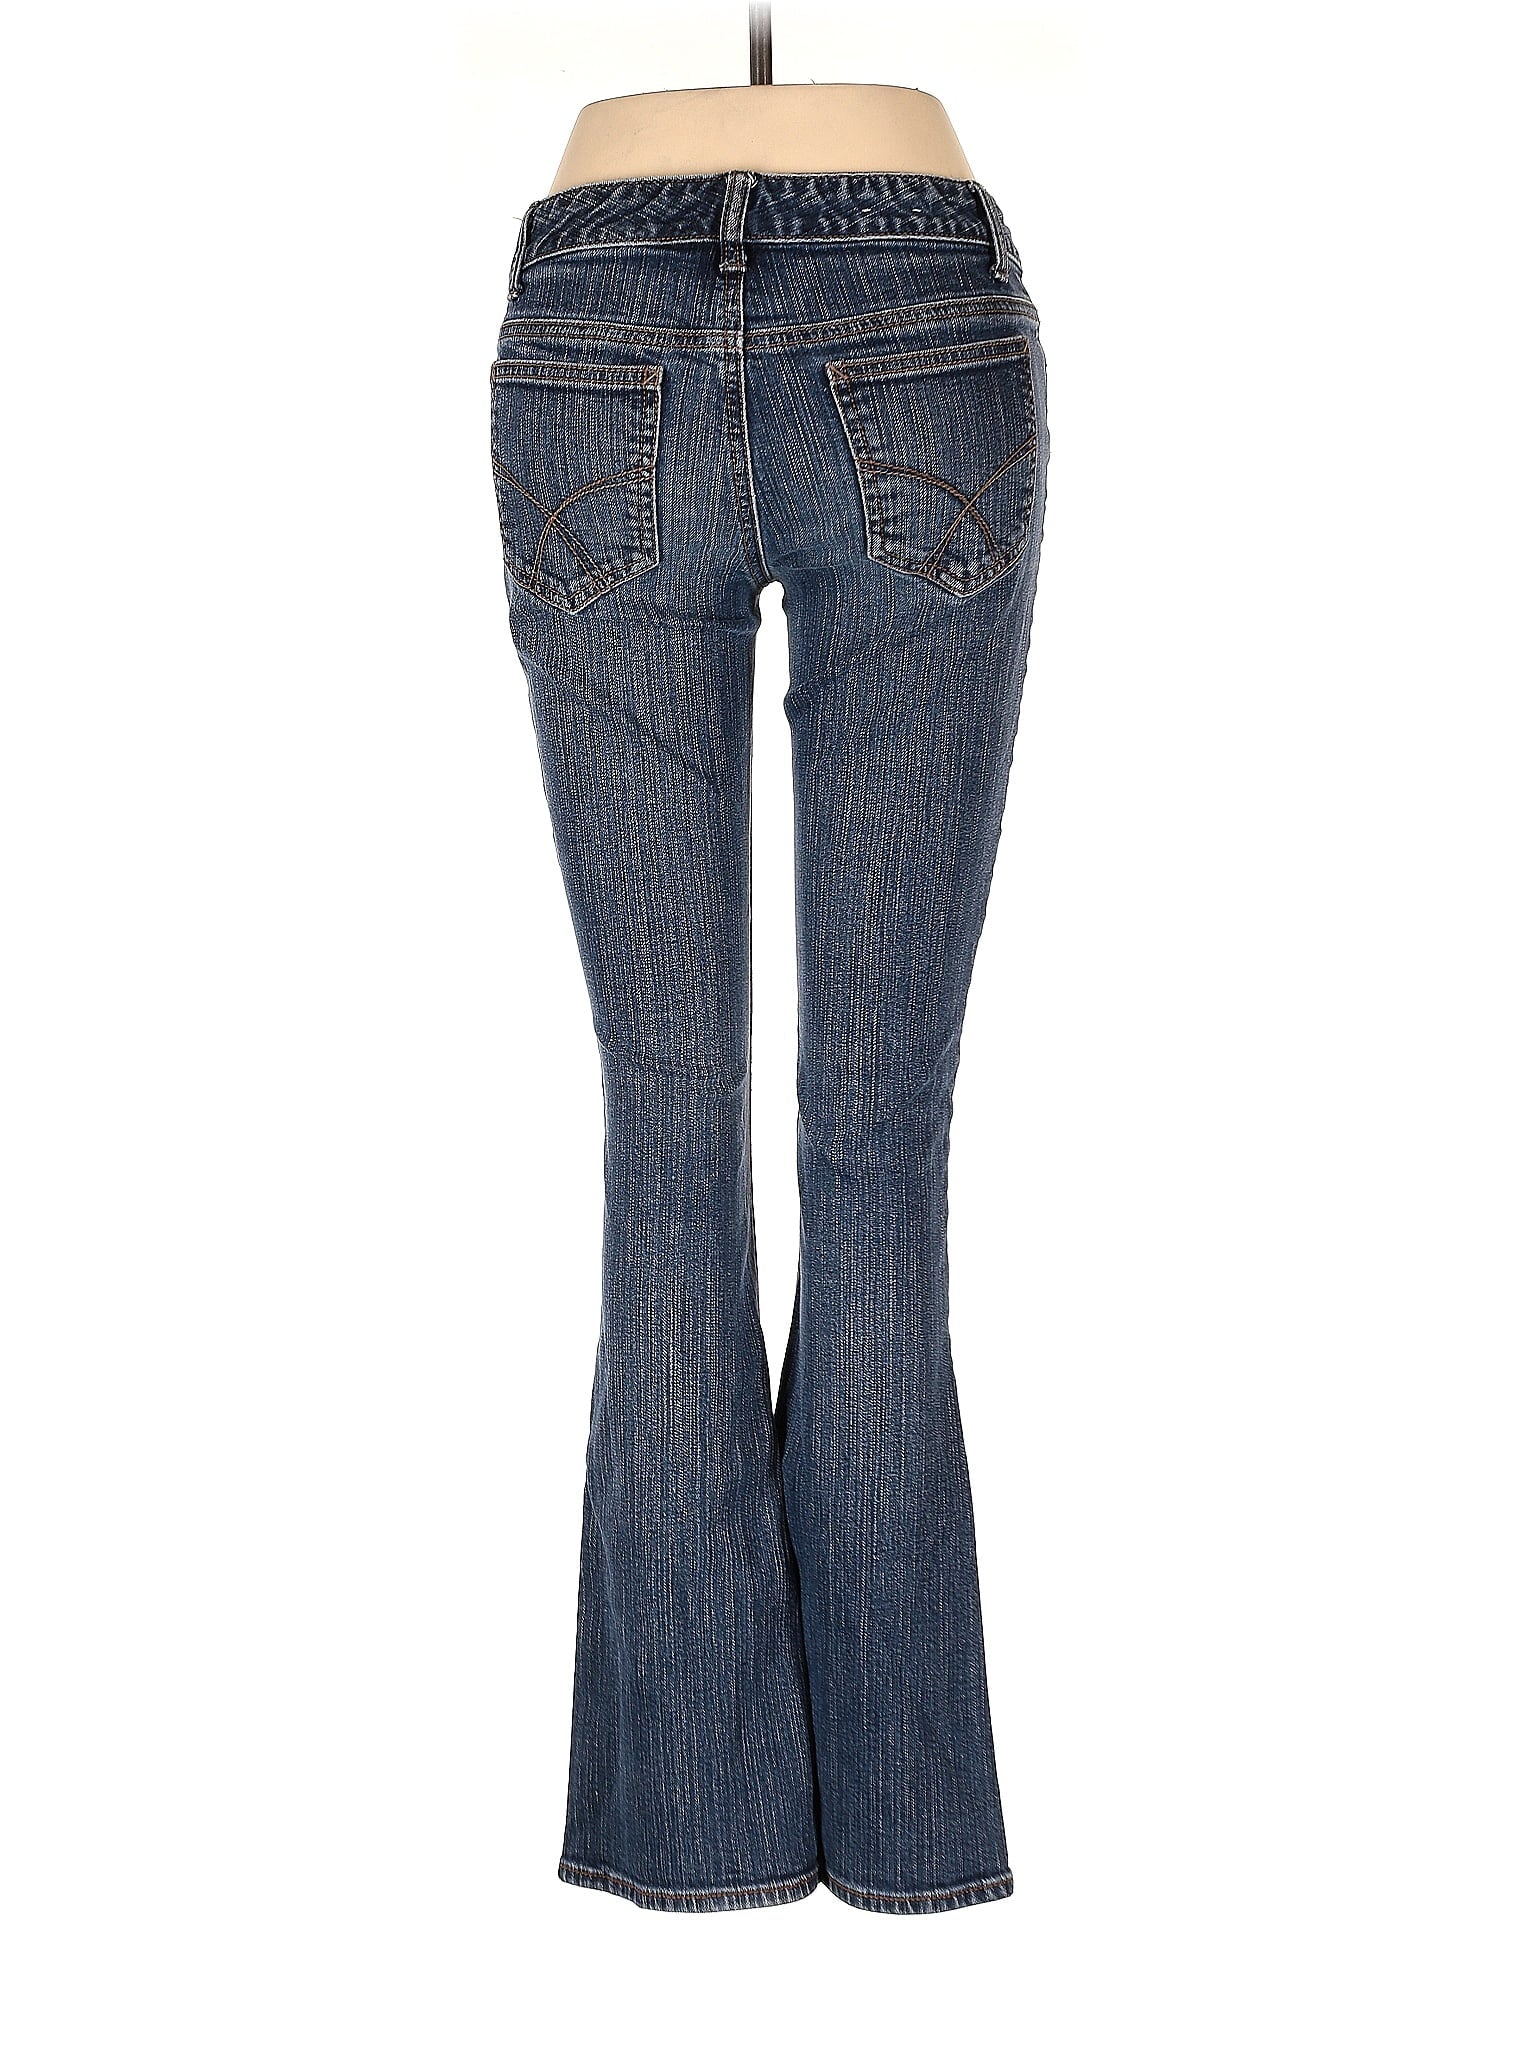 Jeans size - 4